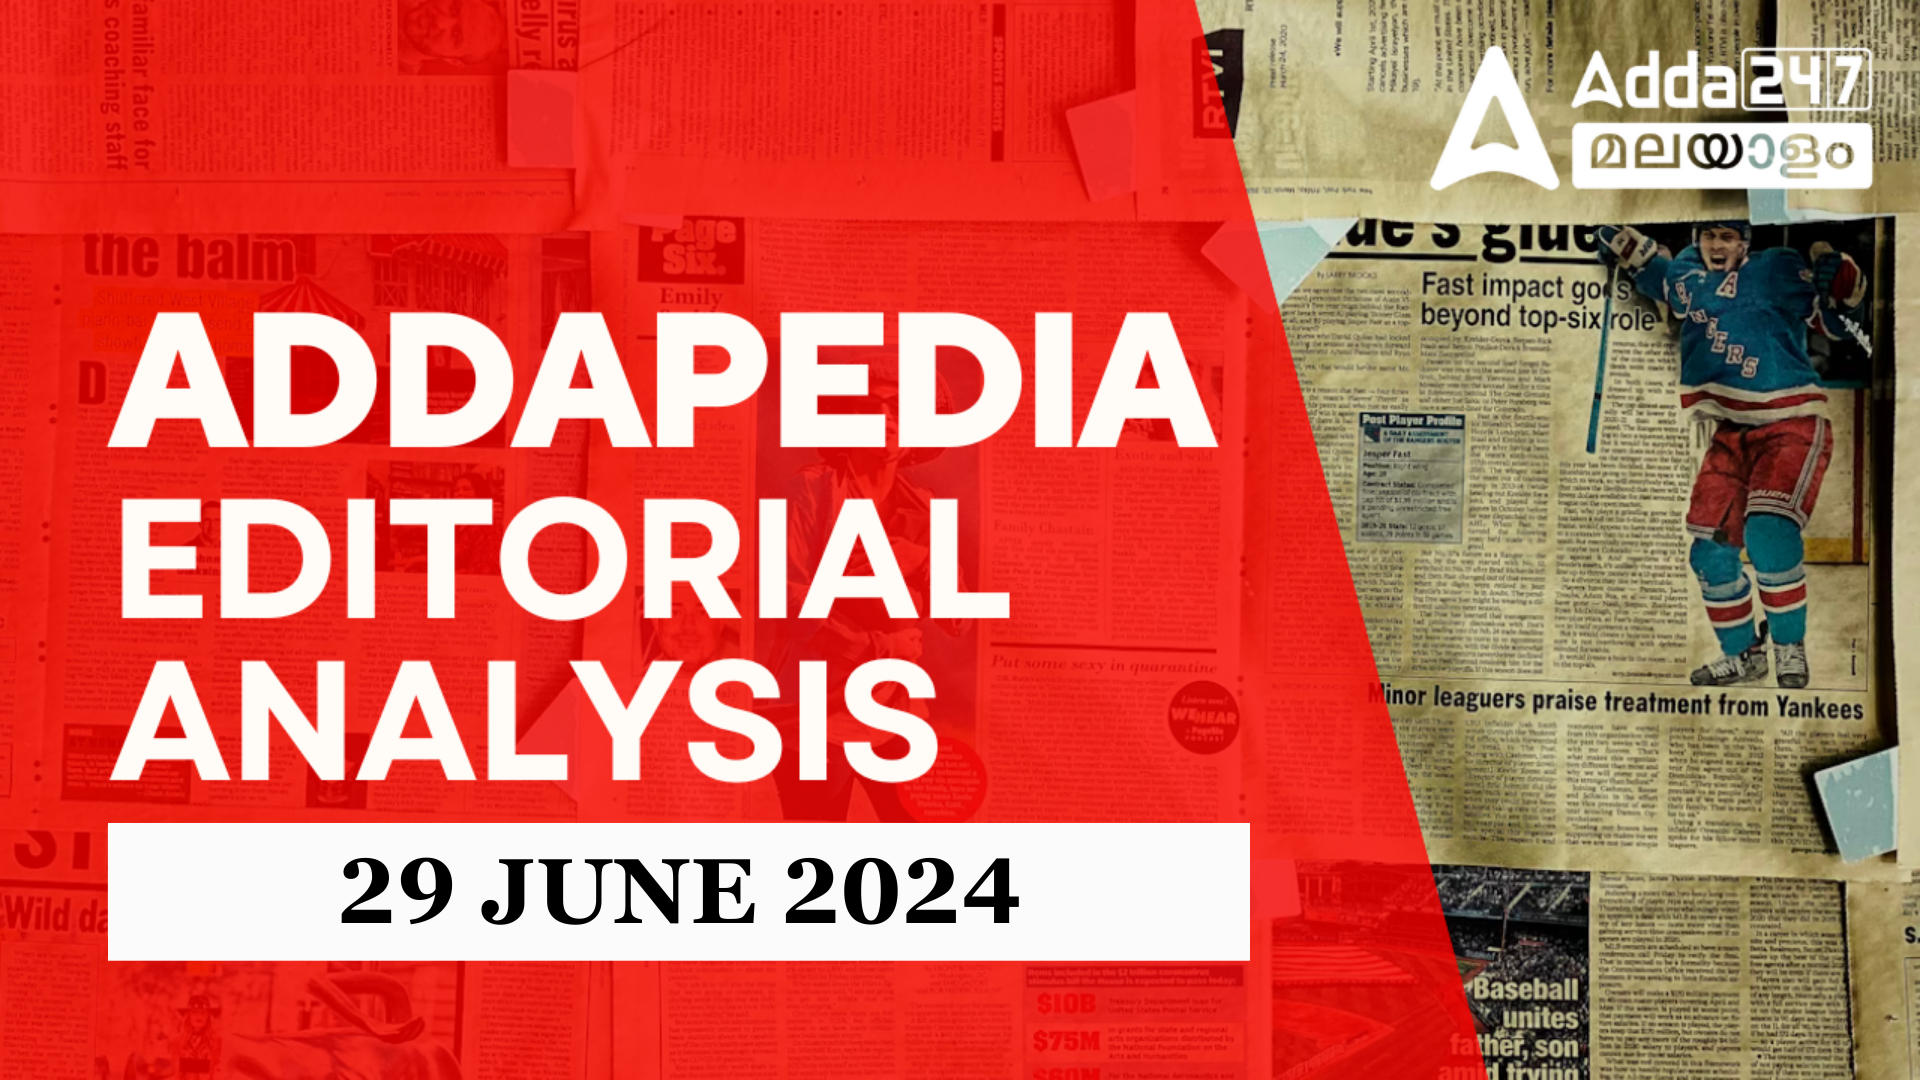 Addapedia Editorial Analysis: Daily News Editorial PDF, 29 June 2024